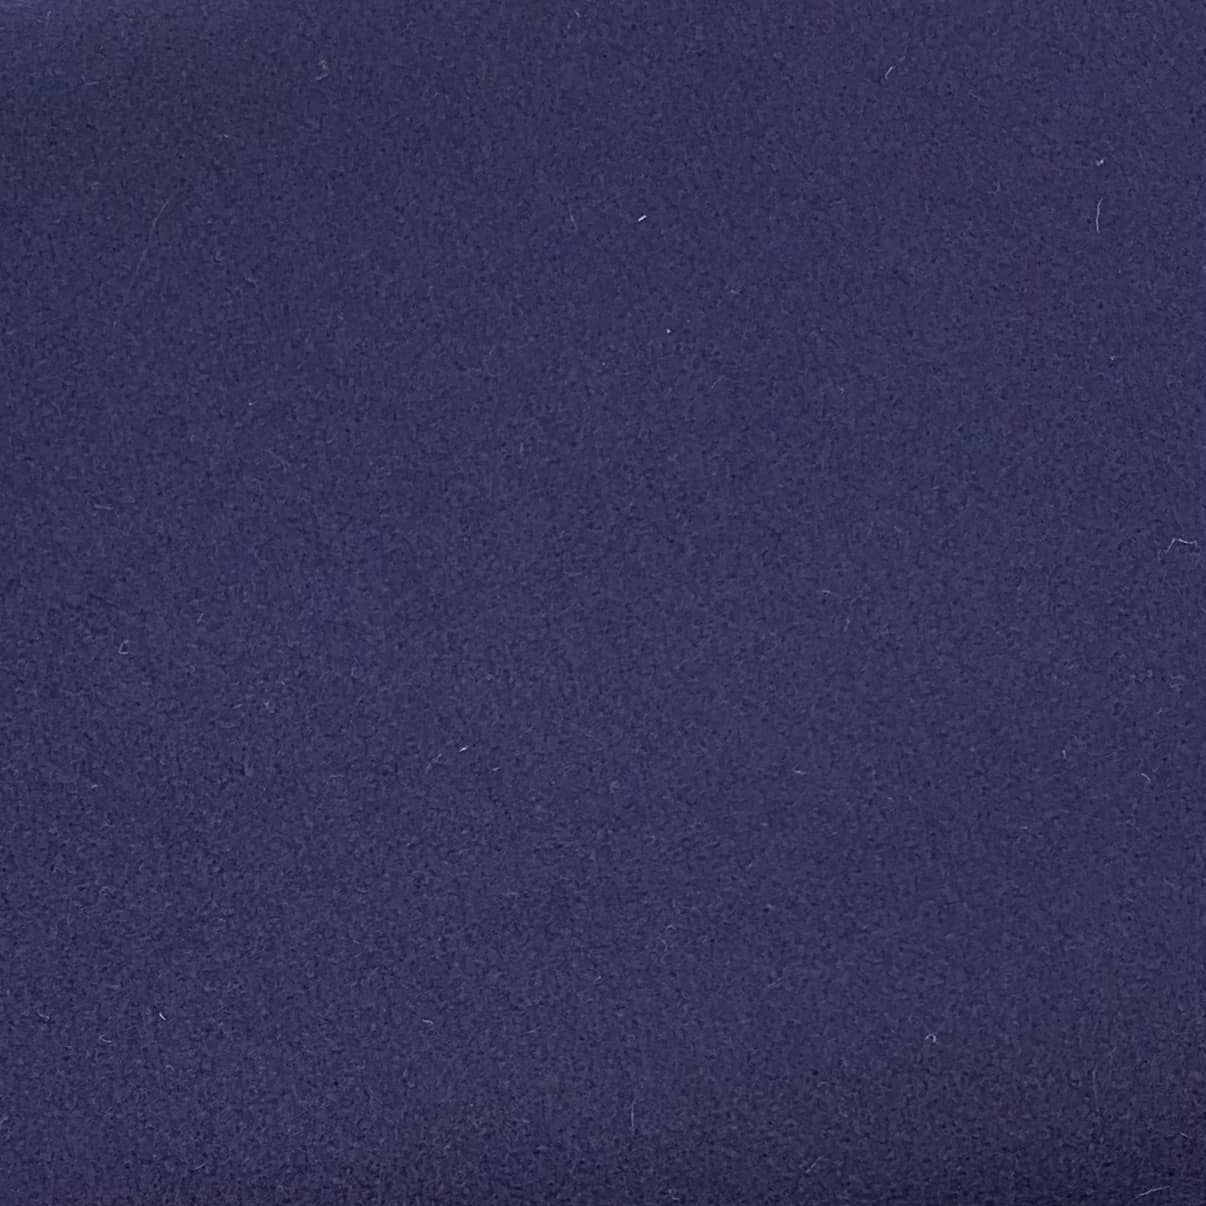 Midnight blue fabric